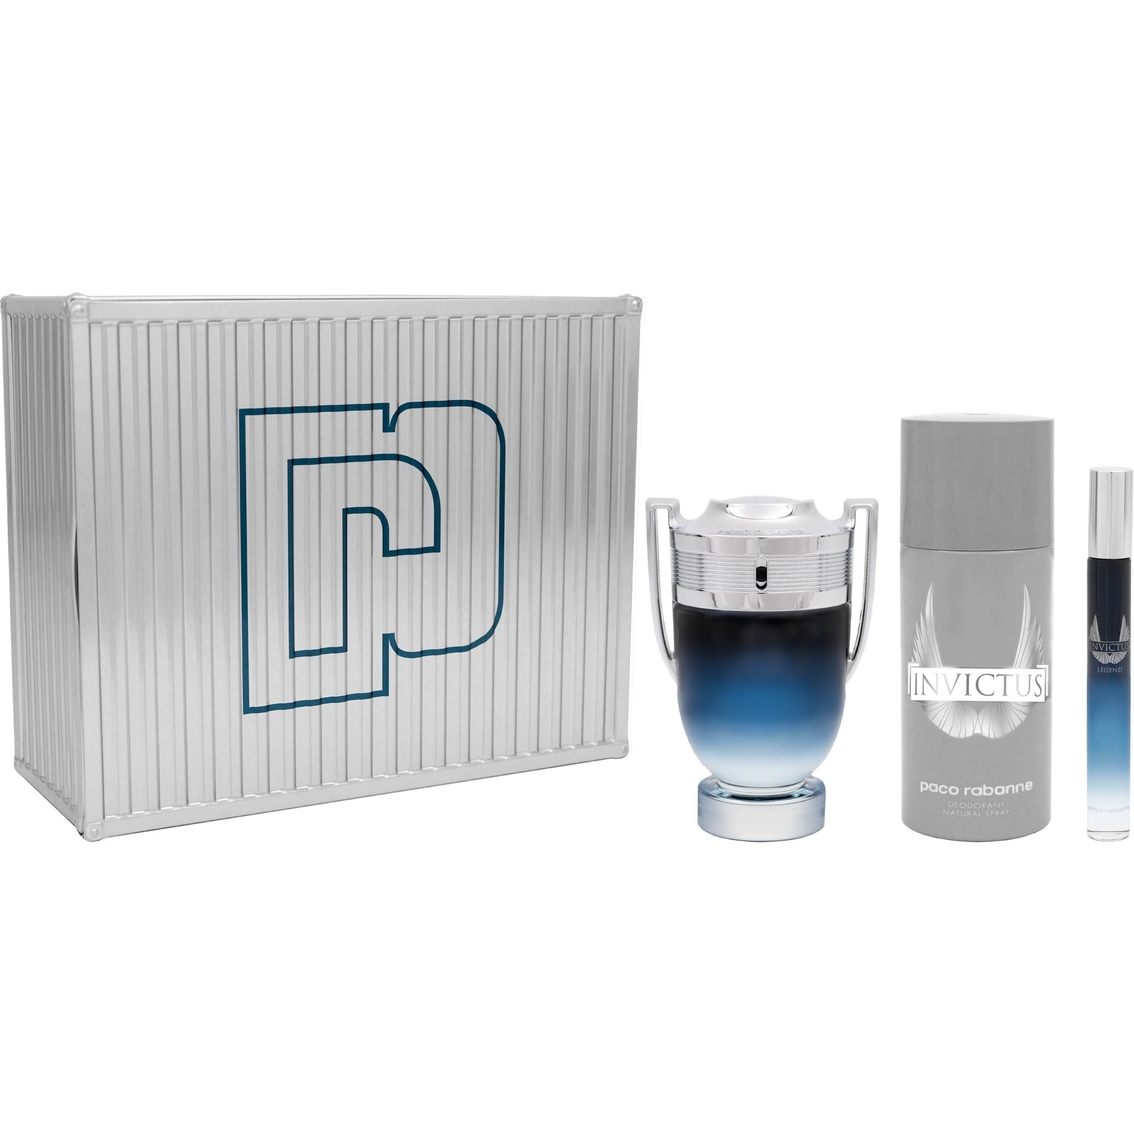 Paco Rabanne Invictus Legend Set | Gift Sets | Beauty & Health | Shop ...